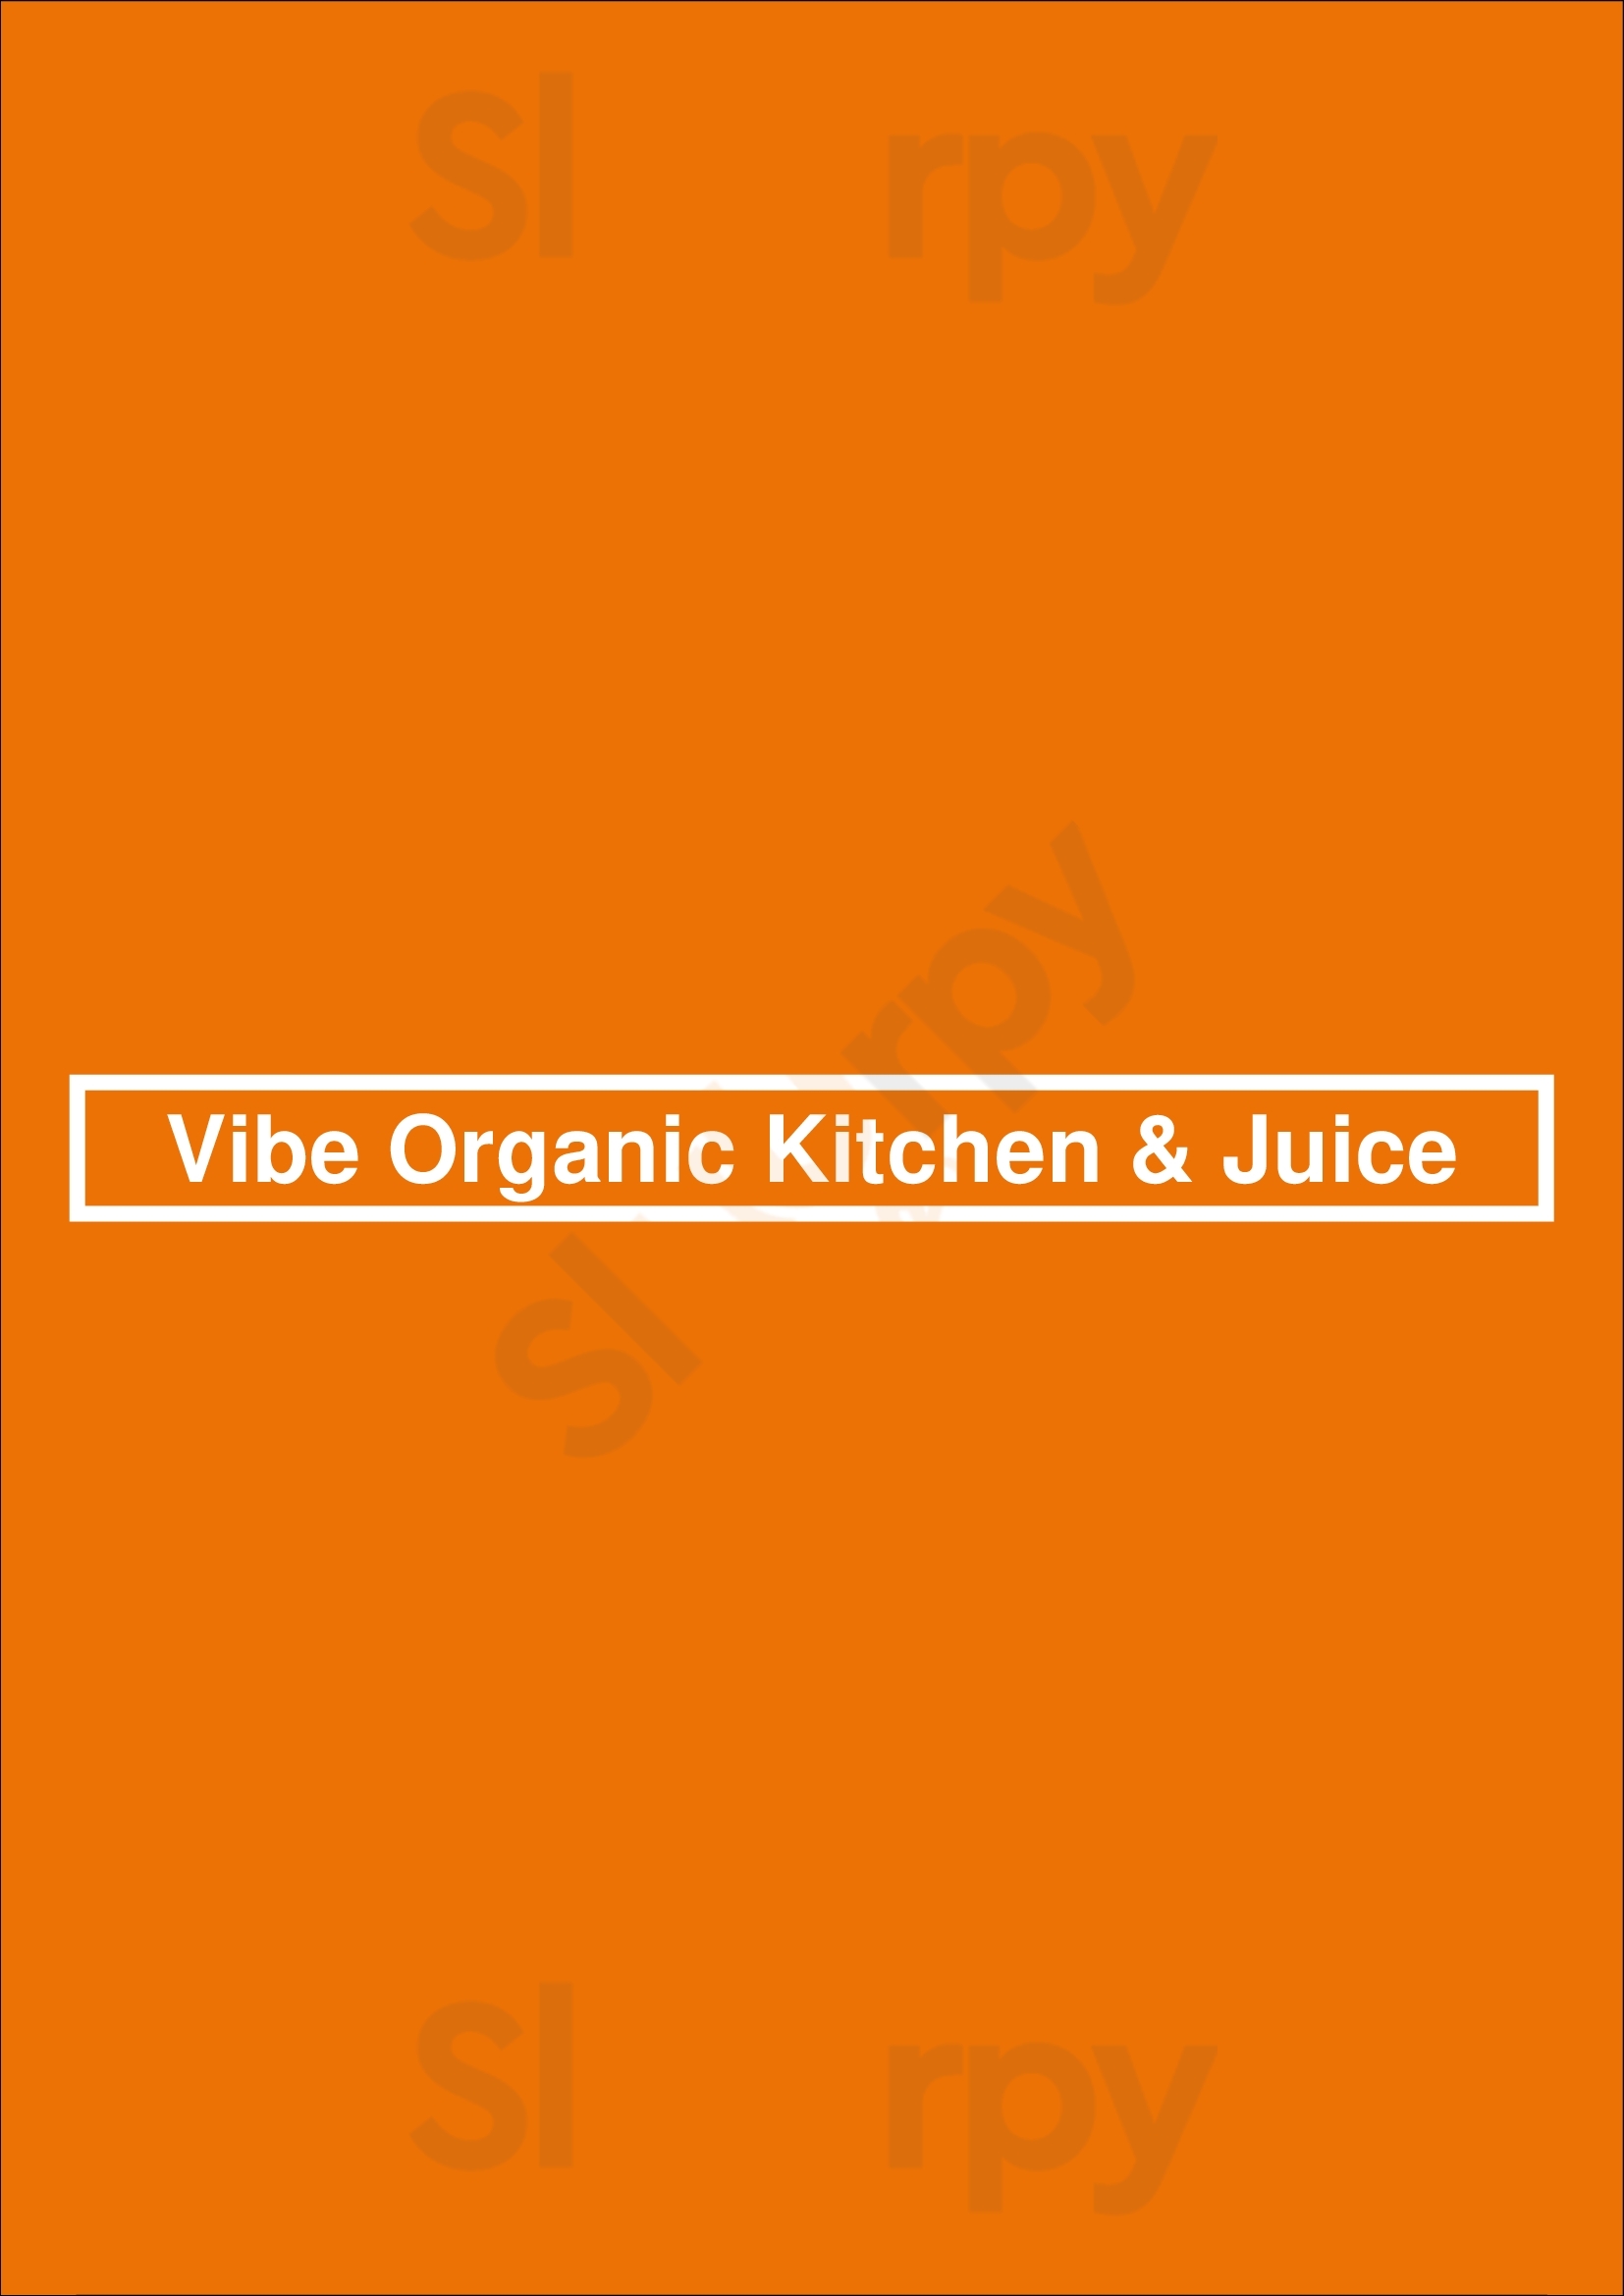 Vibe Organic Kitchen & Juice Newport Beach Menu - 1